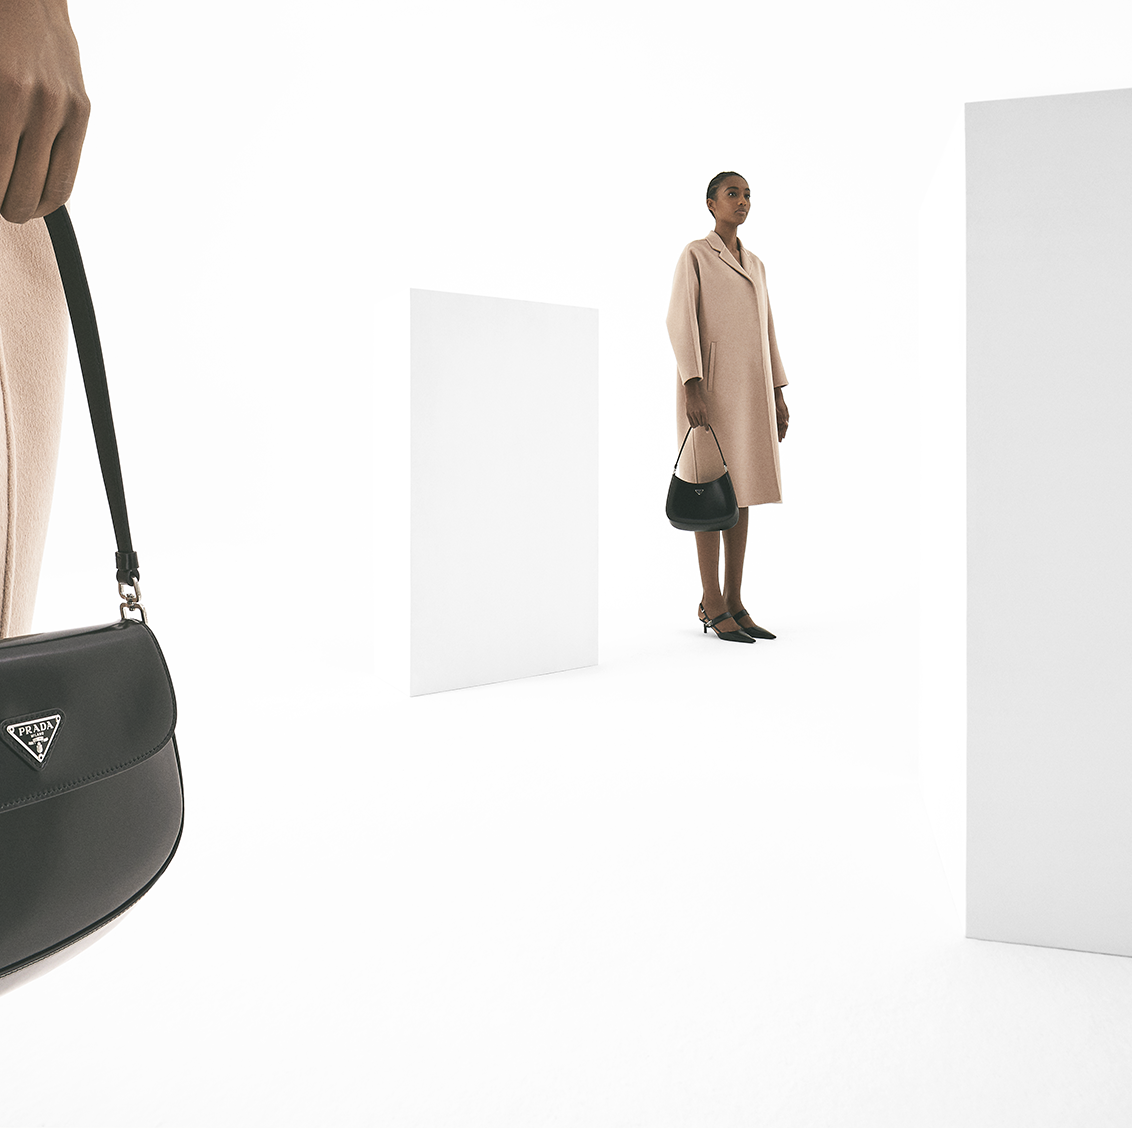 2020 Prada Cleo Shoulder Bag in Aqua Brushed Leather